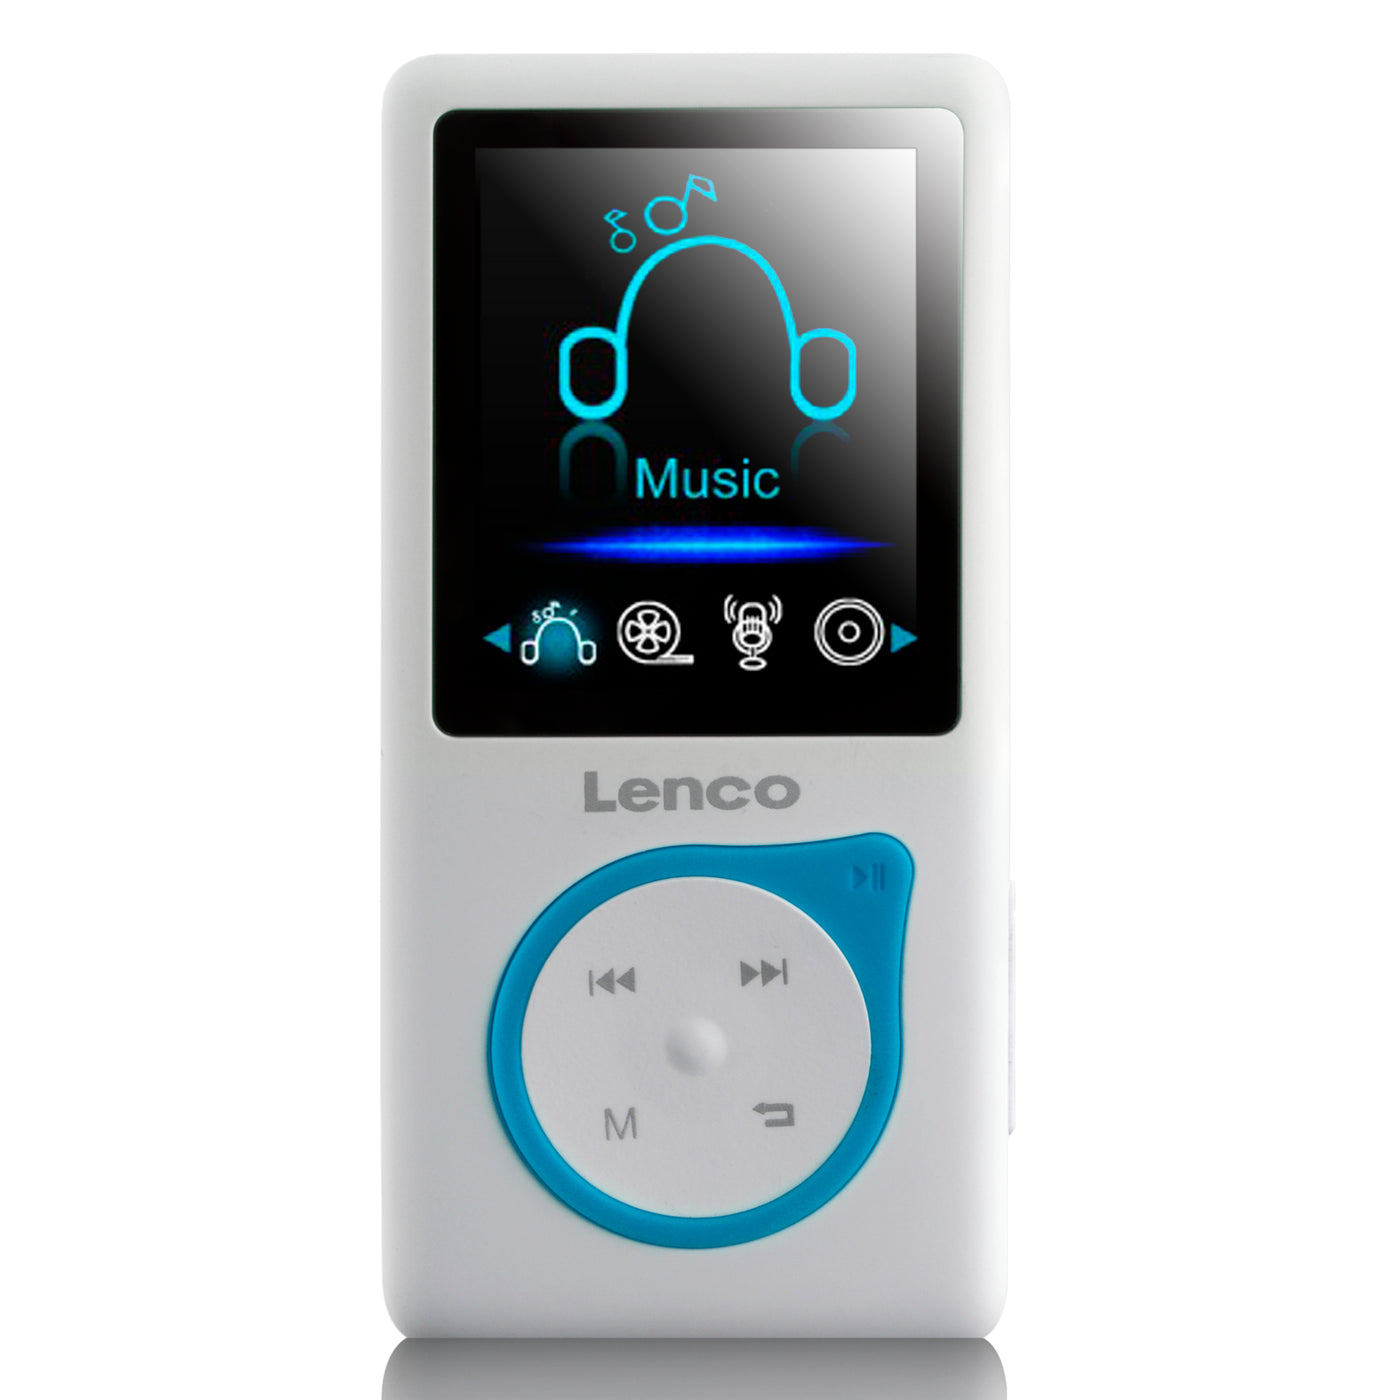 LENCO Xemio-668 Blue - MP3/MP4 player Incl. 8GB micro SD card - Blue